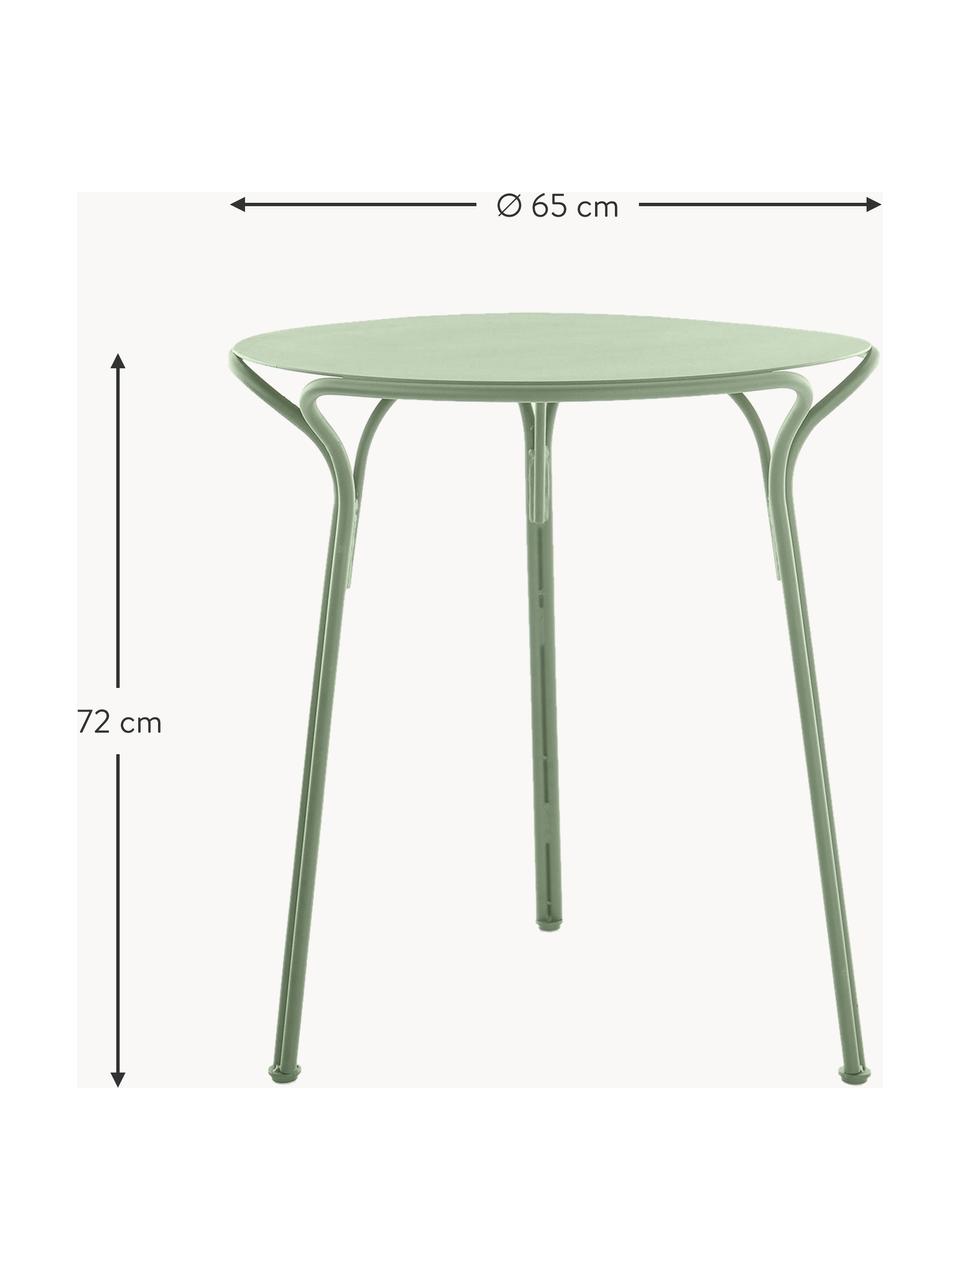 Table de jardin ronde, Hiray, Ø 65 cm, Acier galvanisé, laqué, Vert sauge, Ø 65 x haut. 72 cm